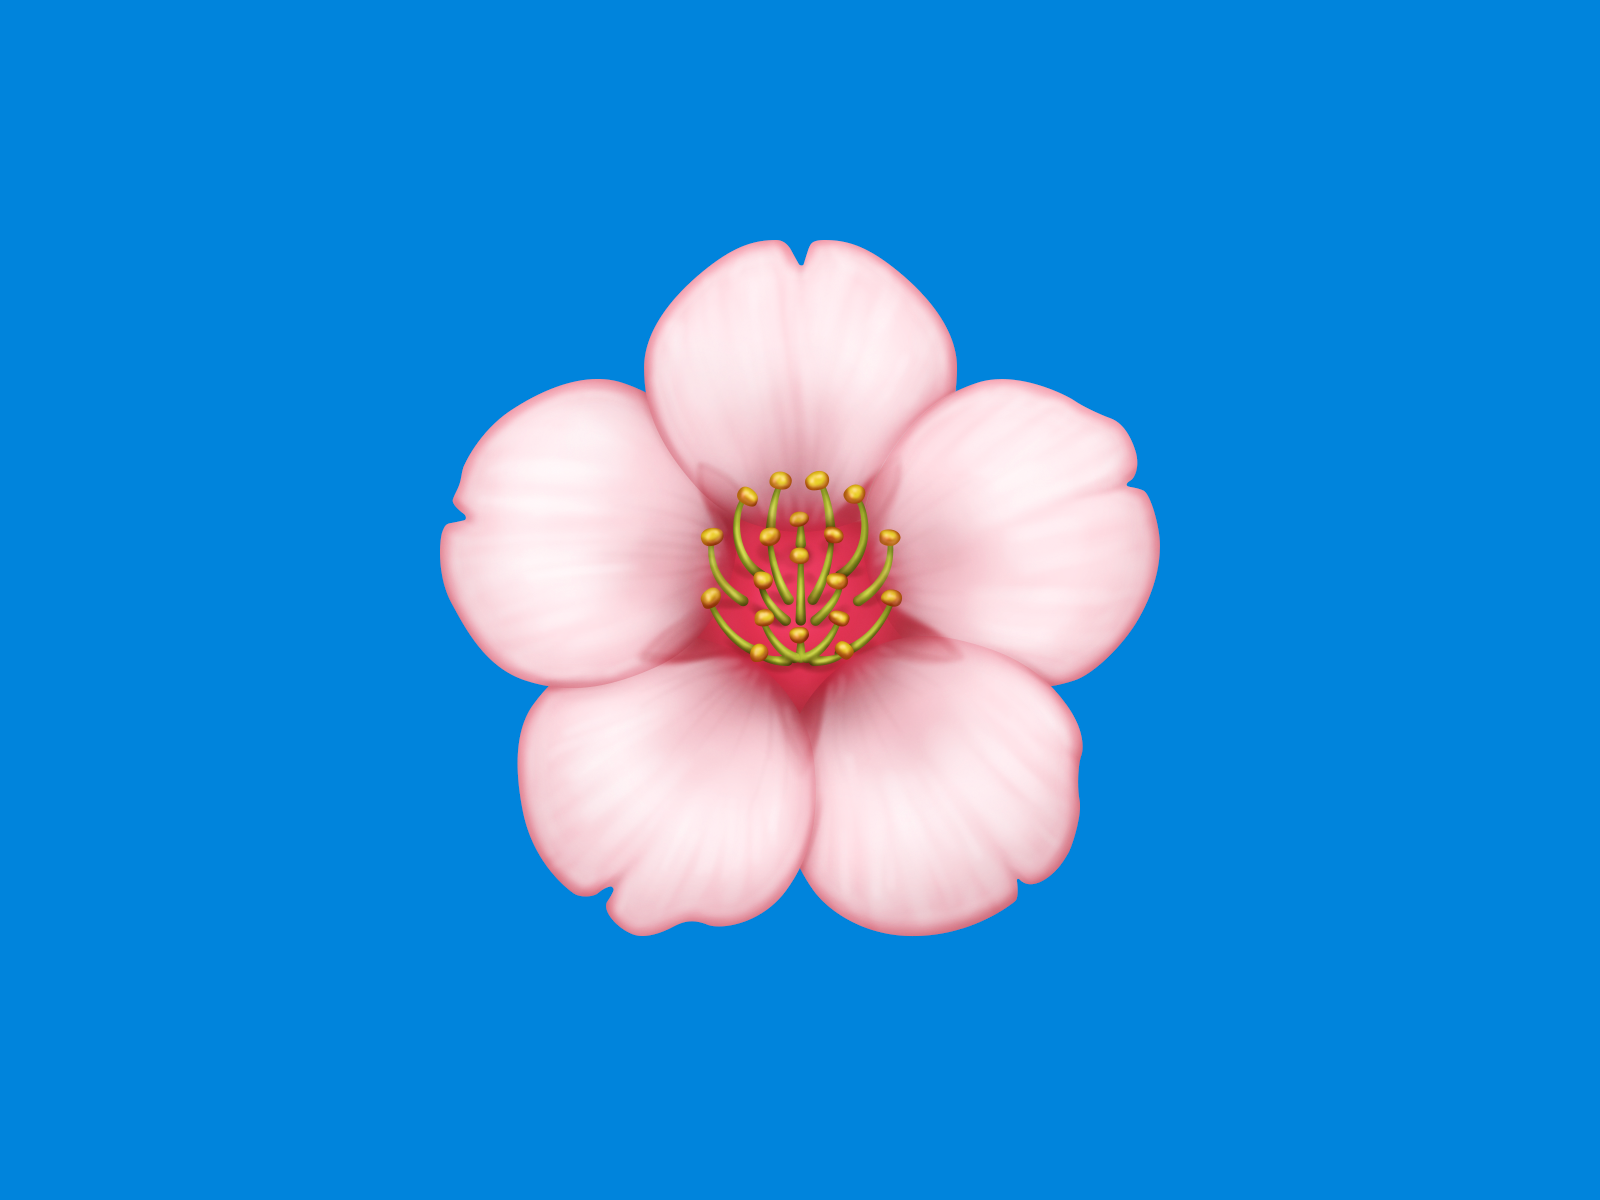 Cherry Blossom U 1f338 By Alexa Grafera For Parakeet On Dribbble